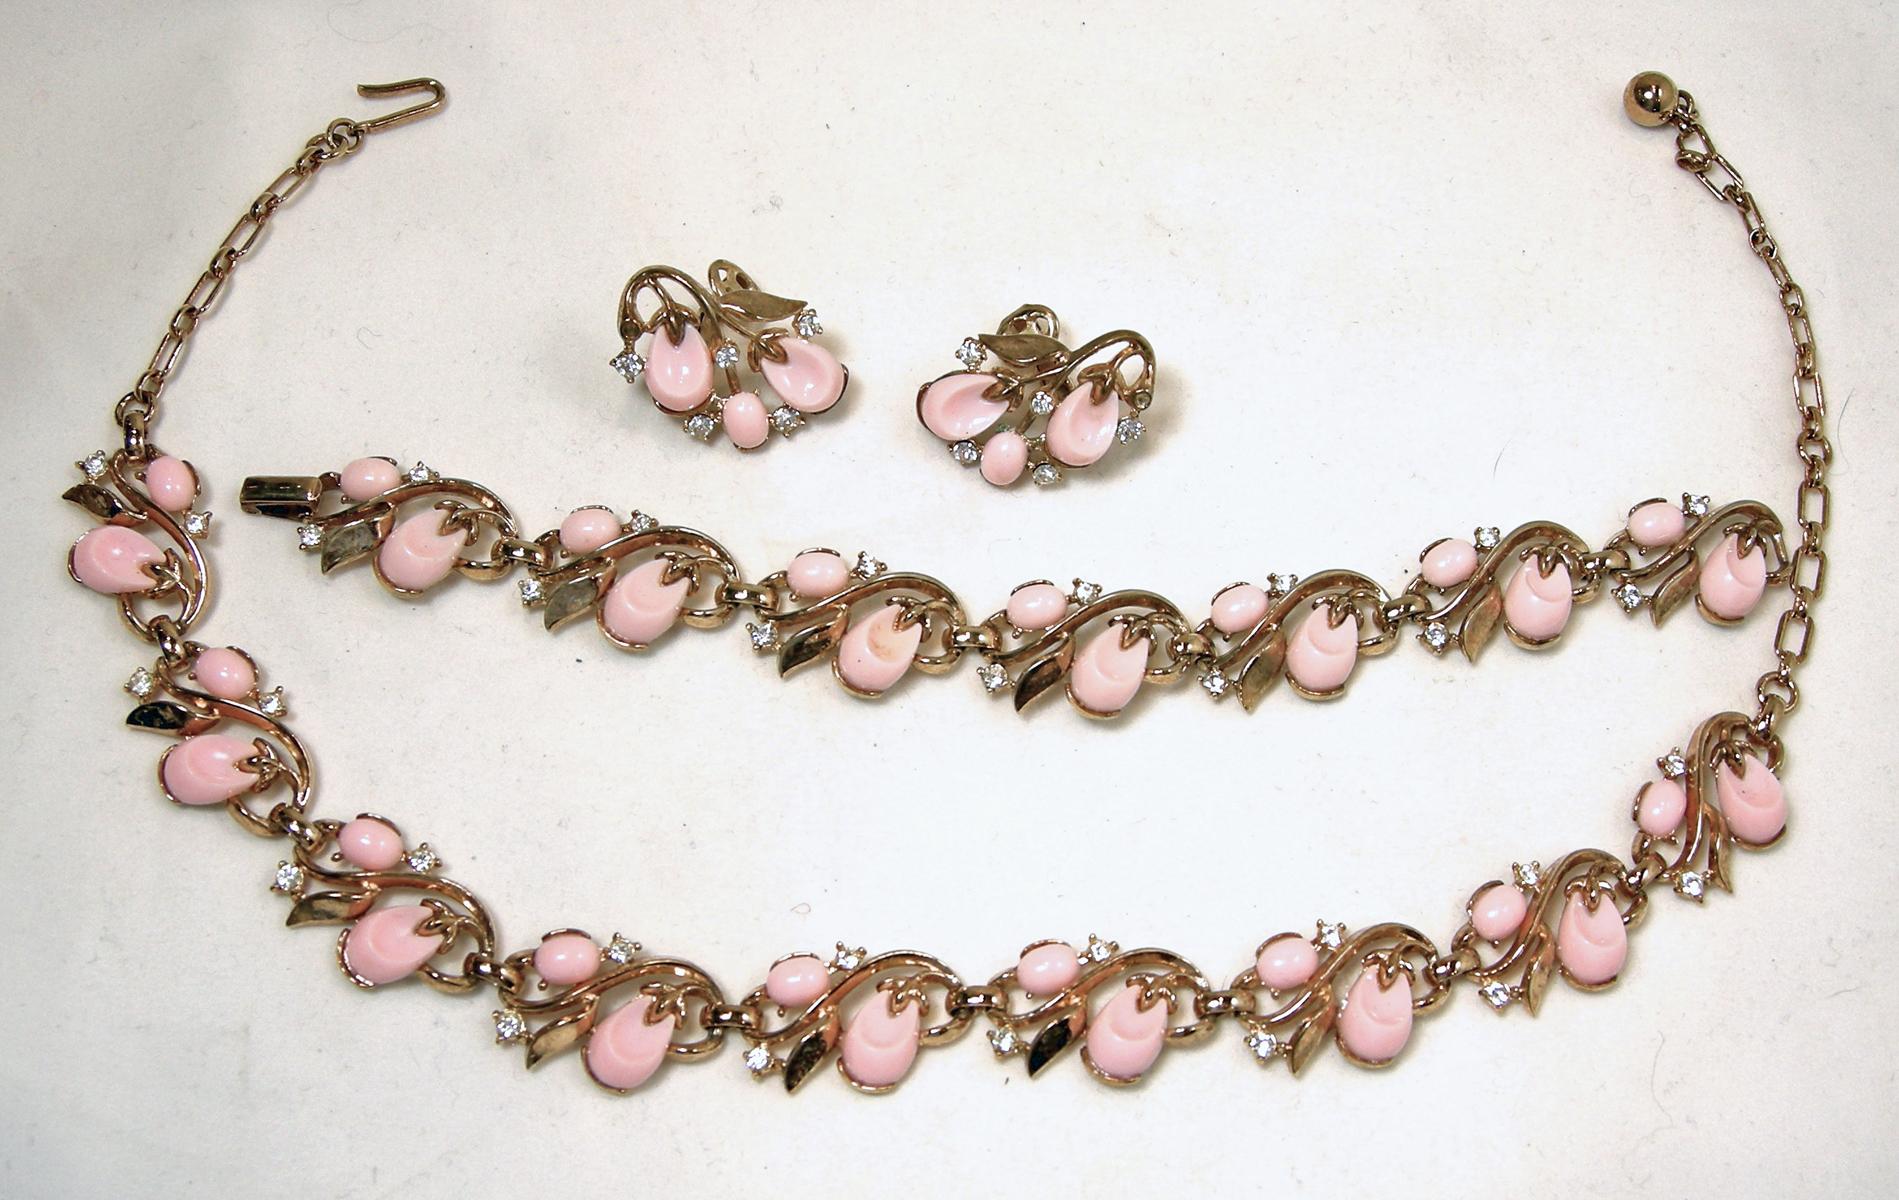 Women's or Men's Vintage Signed Trifari Pink Parure … Necklace, Bracelet & Earrings For Sale